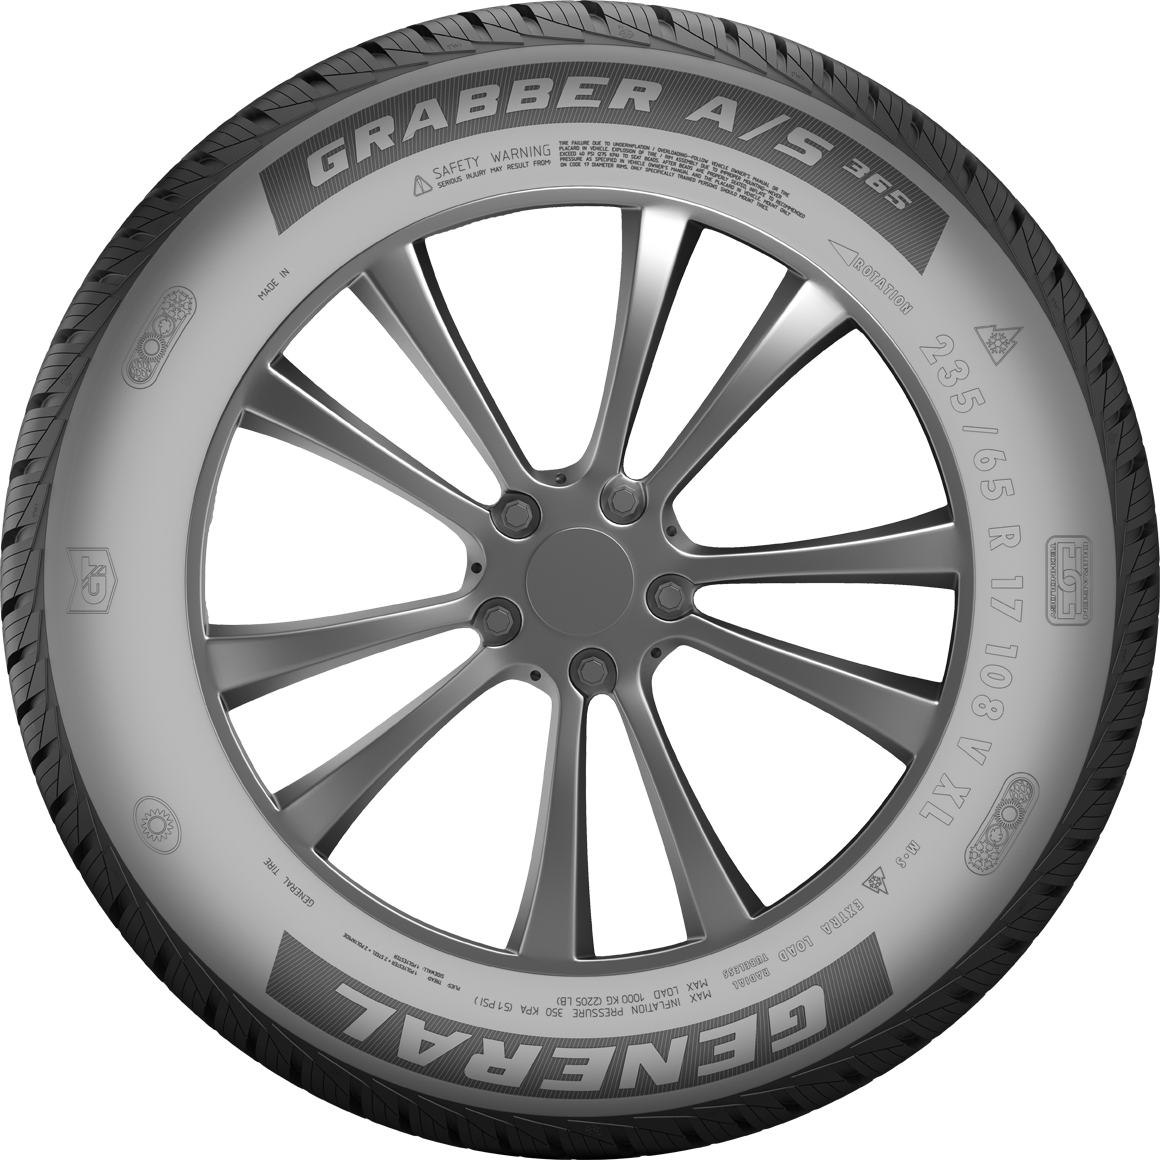 General Tire Grabber A/S 365 255/55R18 109V FR XL - KolayOto